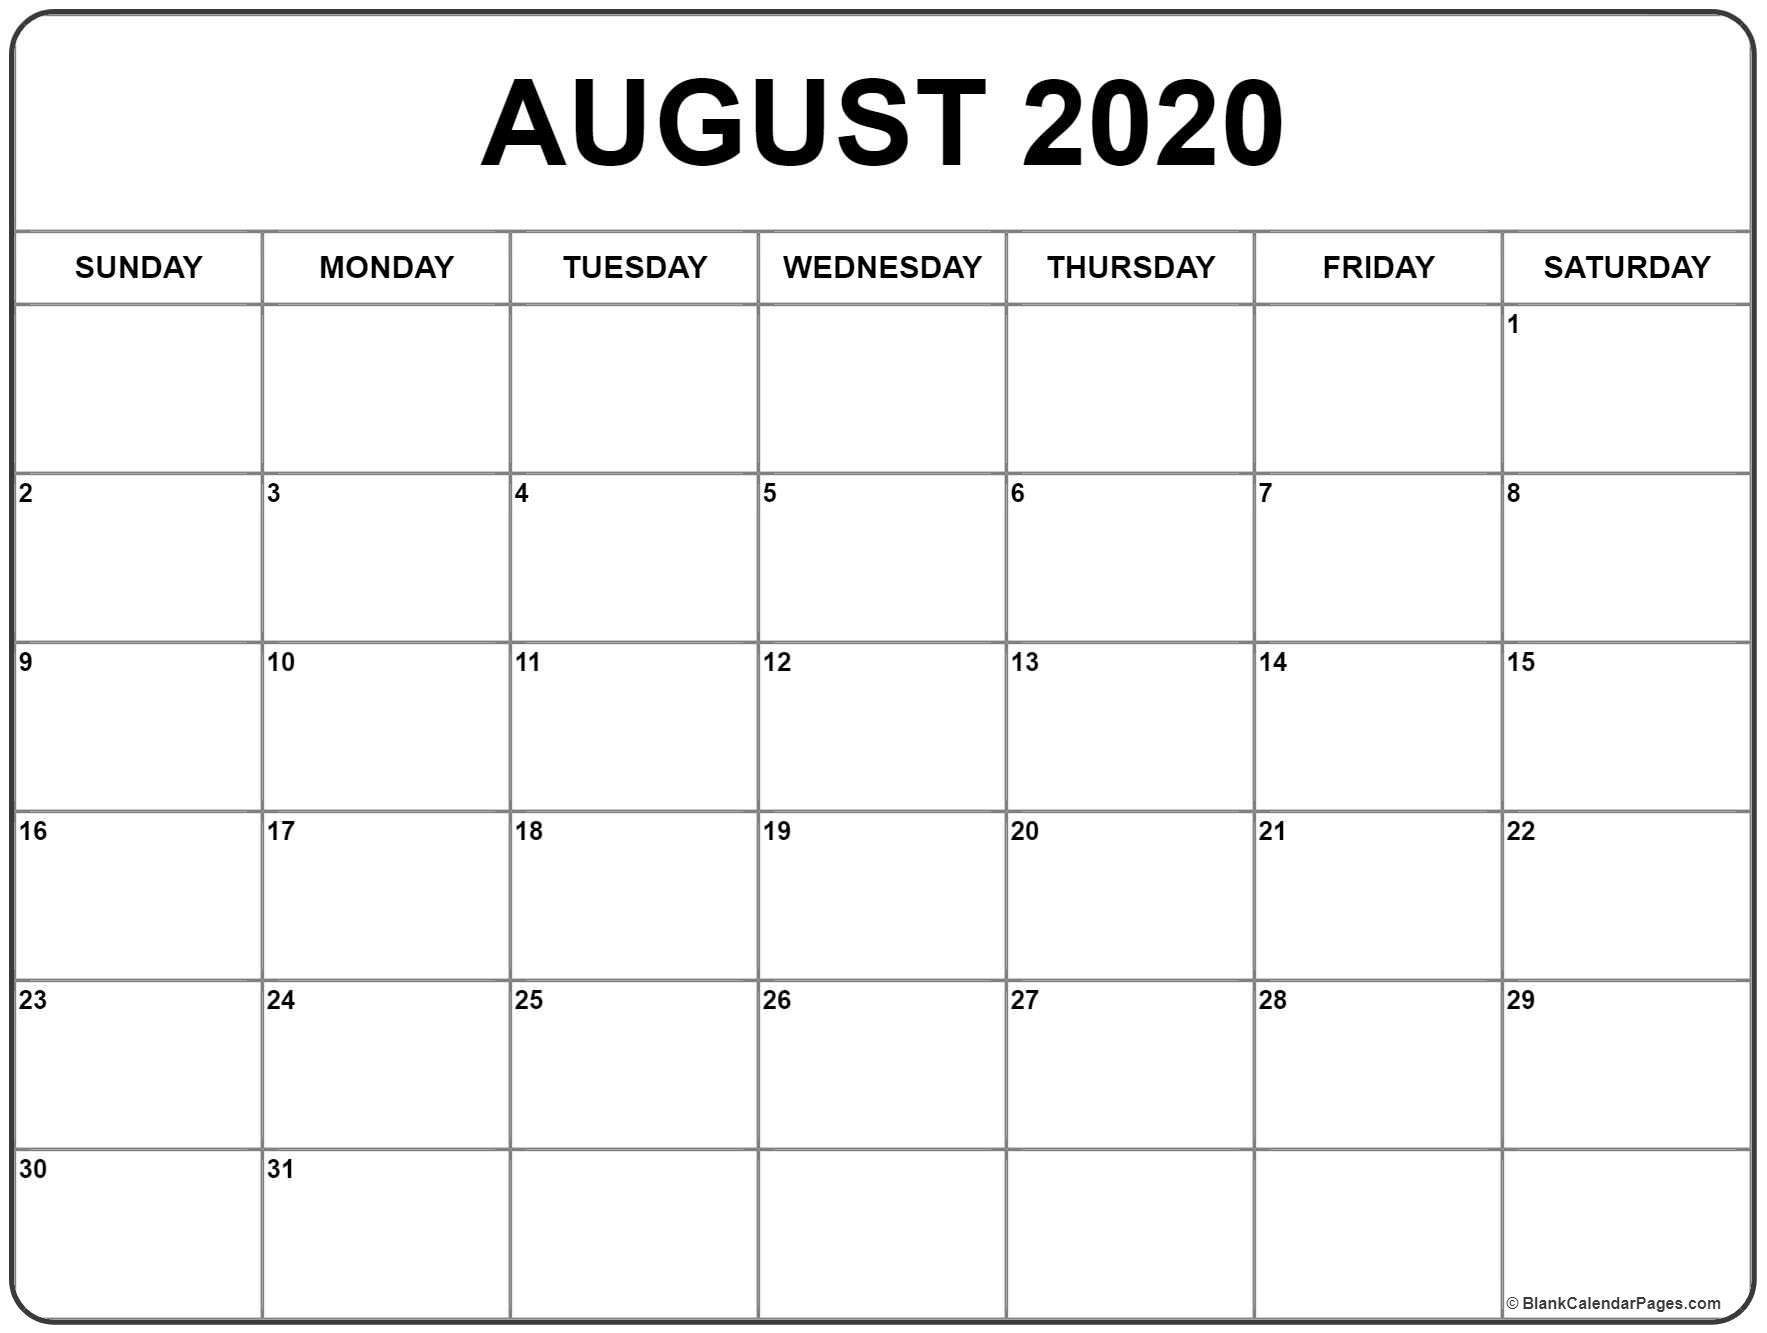 August 2020 Calendar | Free Printable Monthly Calendars  Small August 2020 Calendar